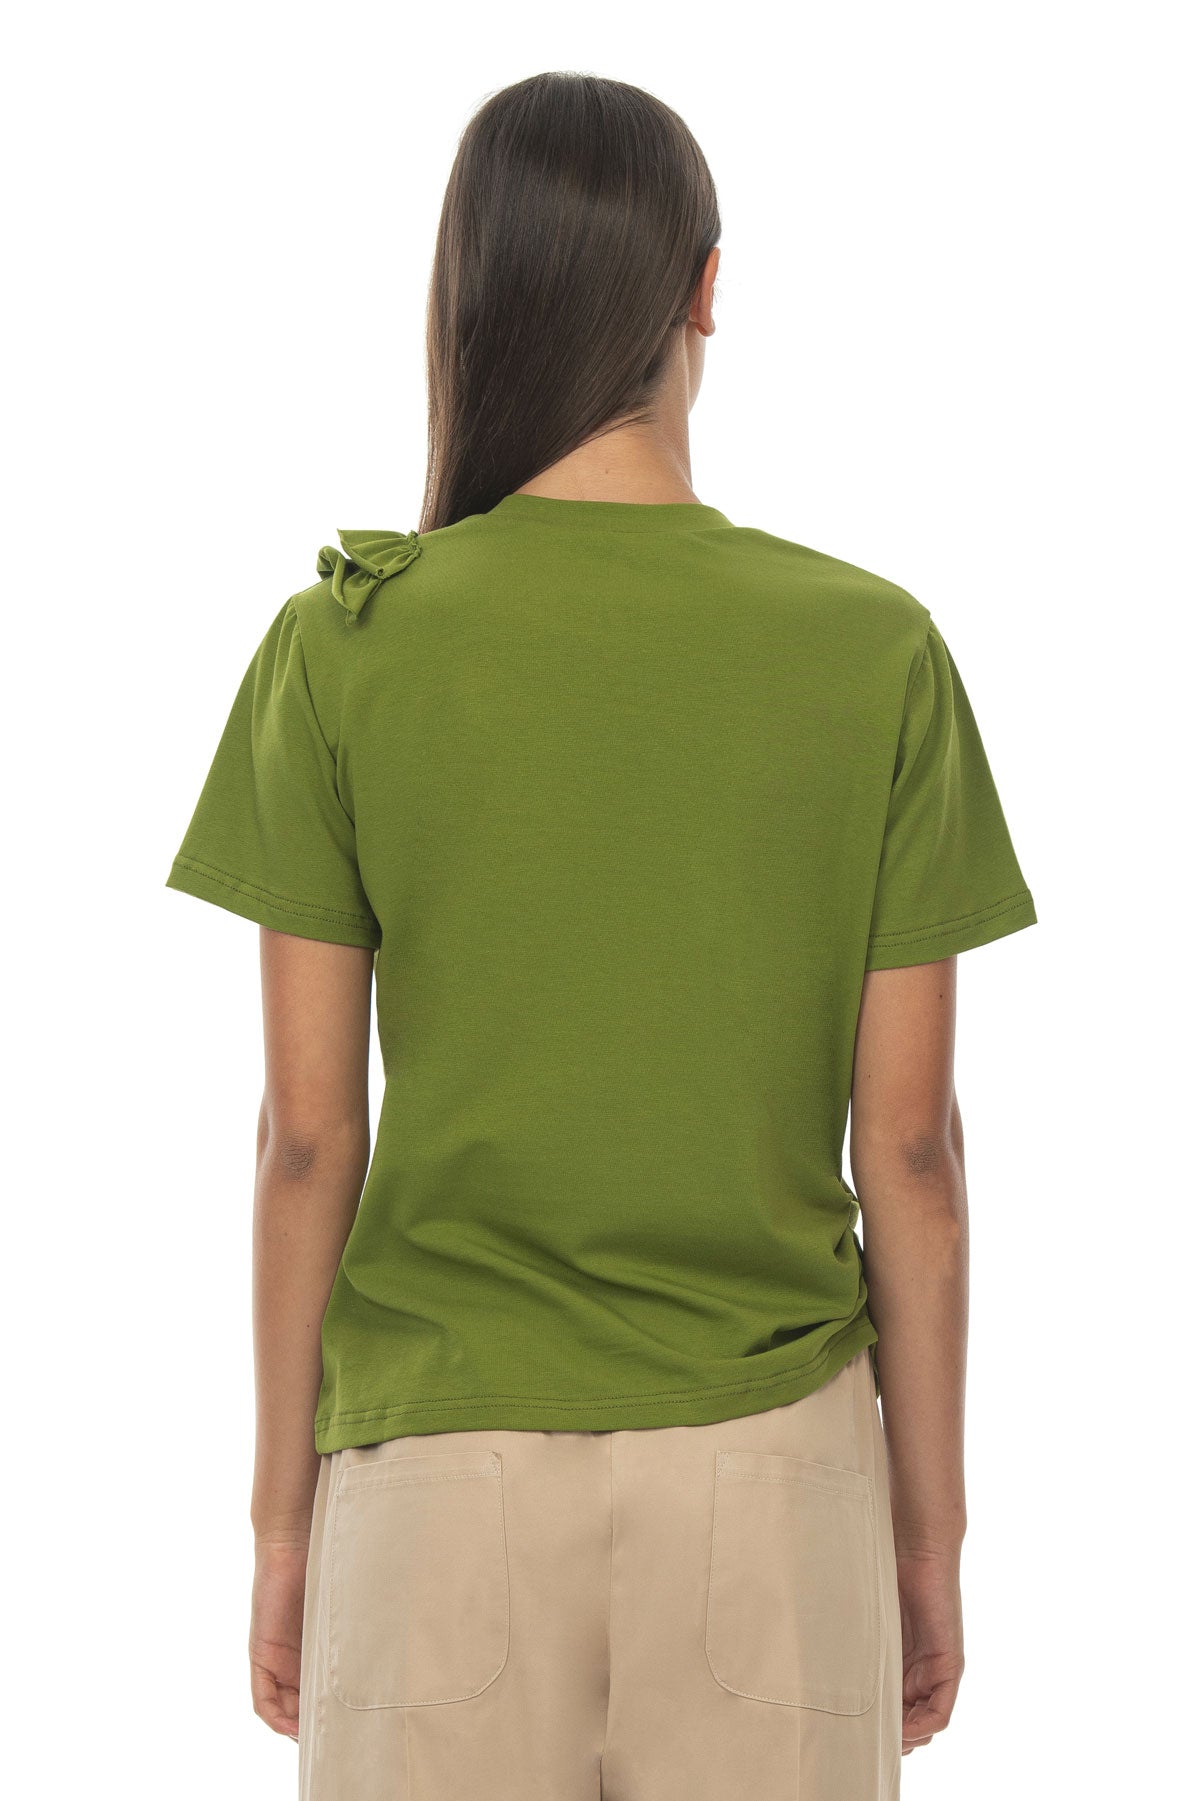 Jasmine T-shirt Verde